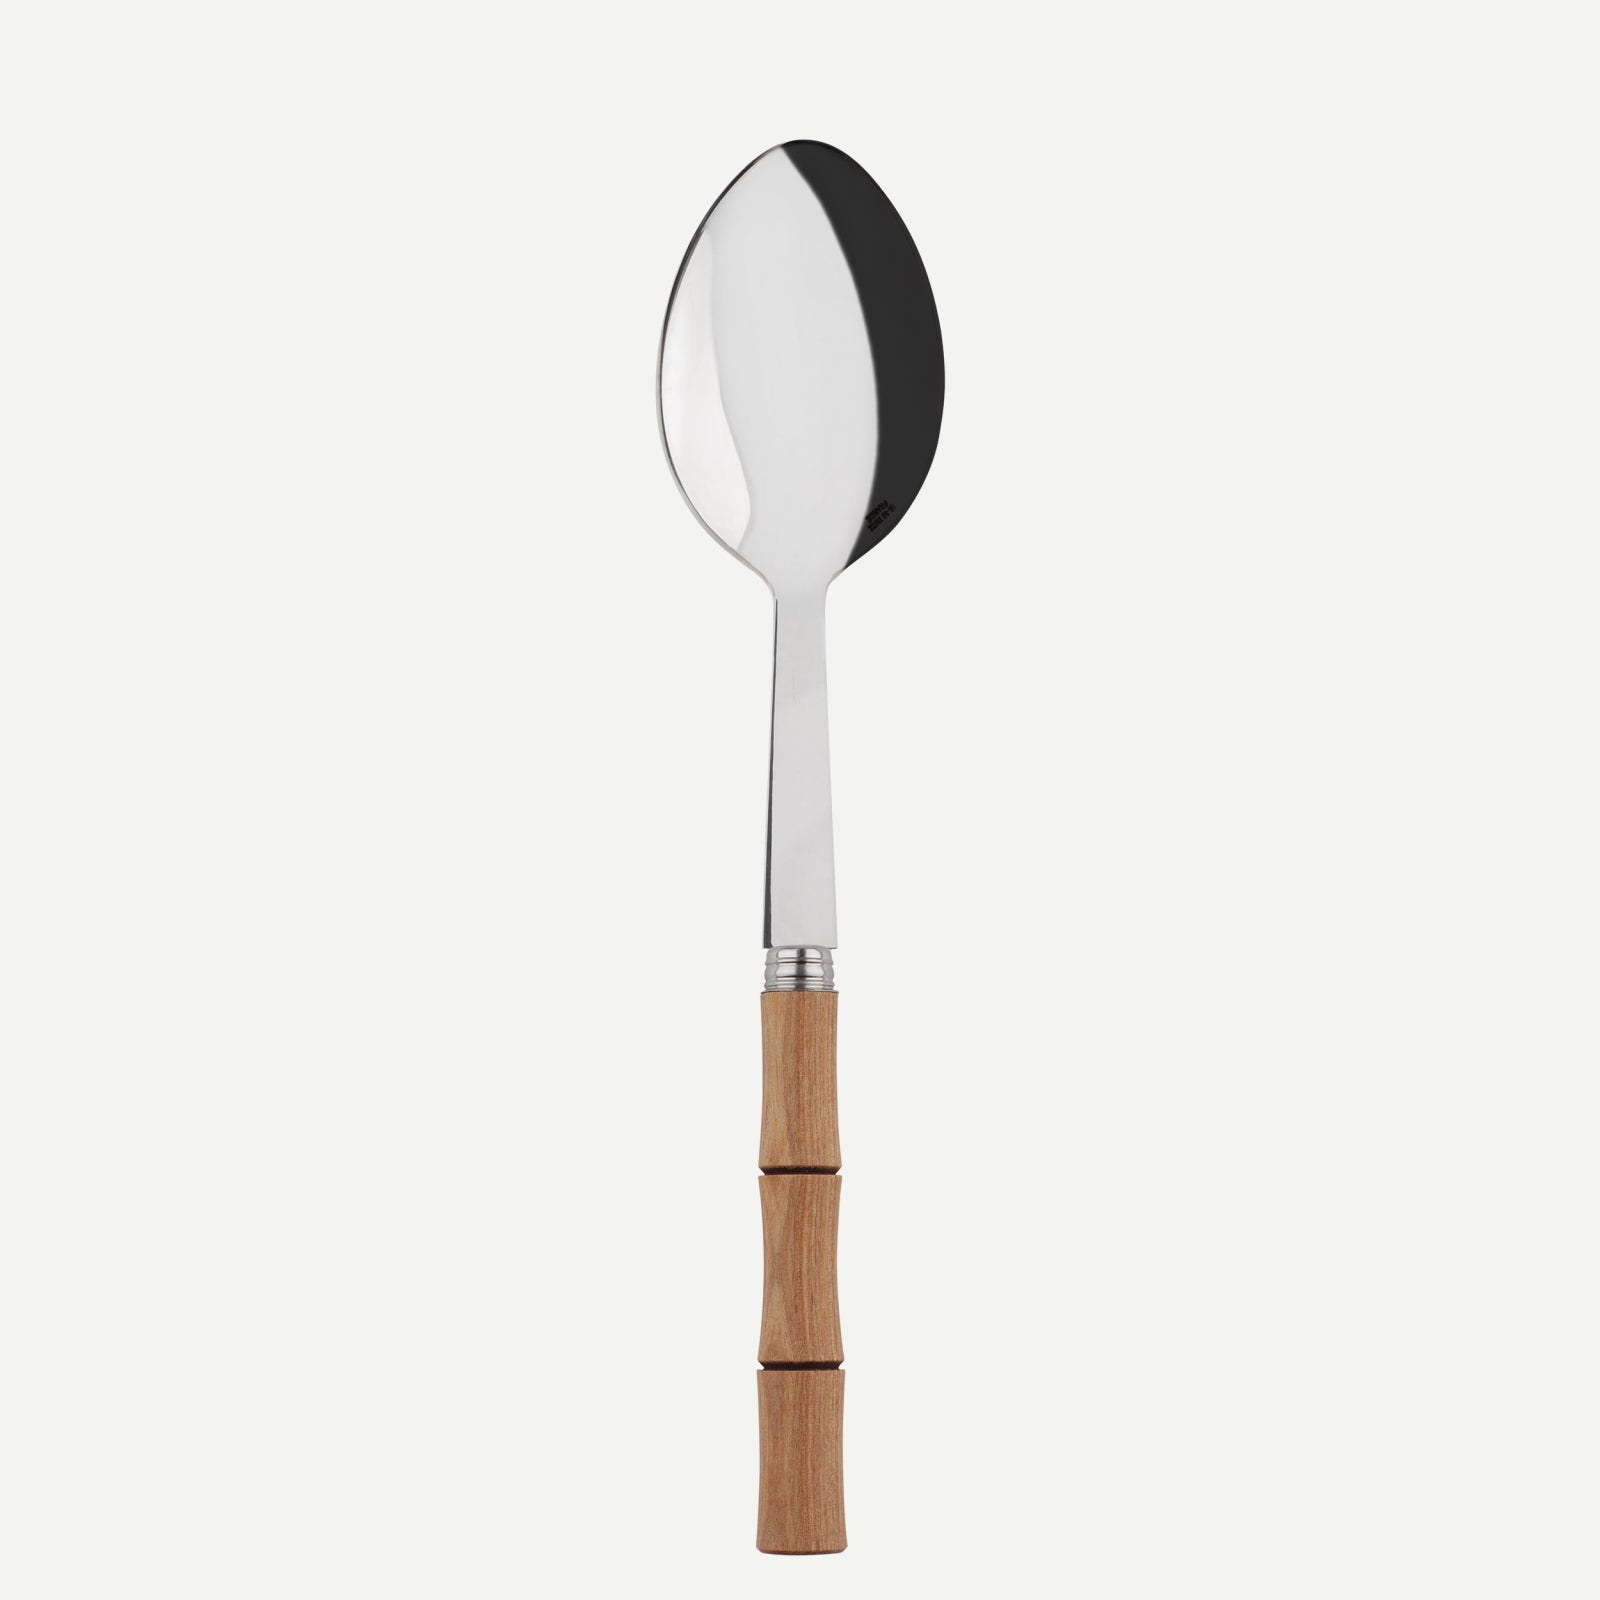 Serving spoon - Bamboo - Light press wood